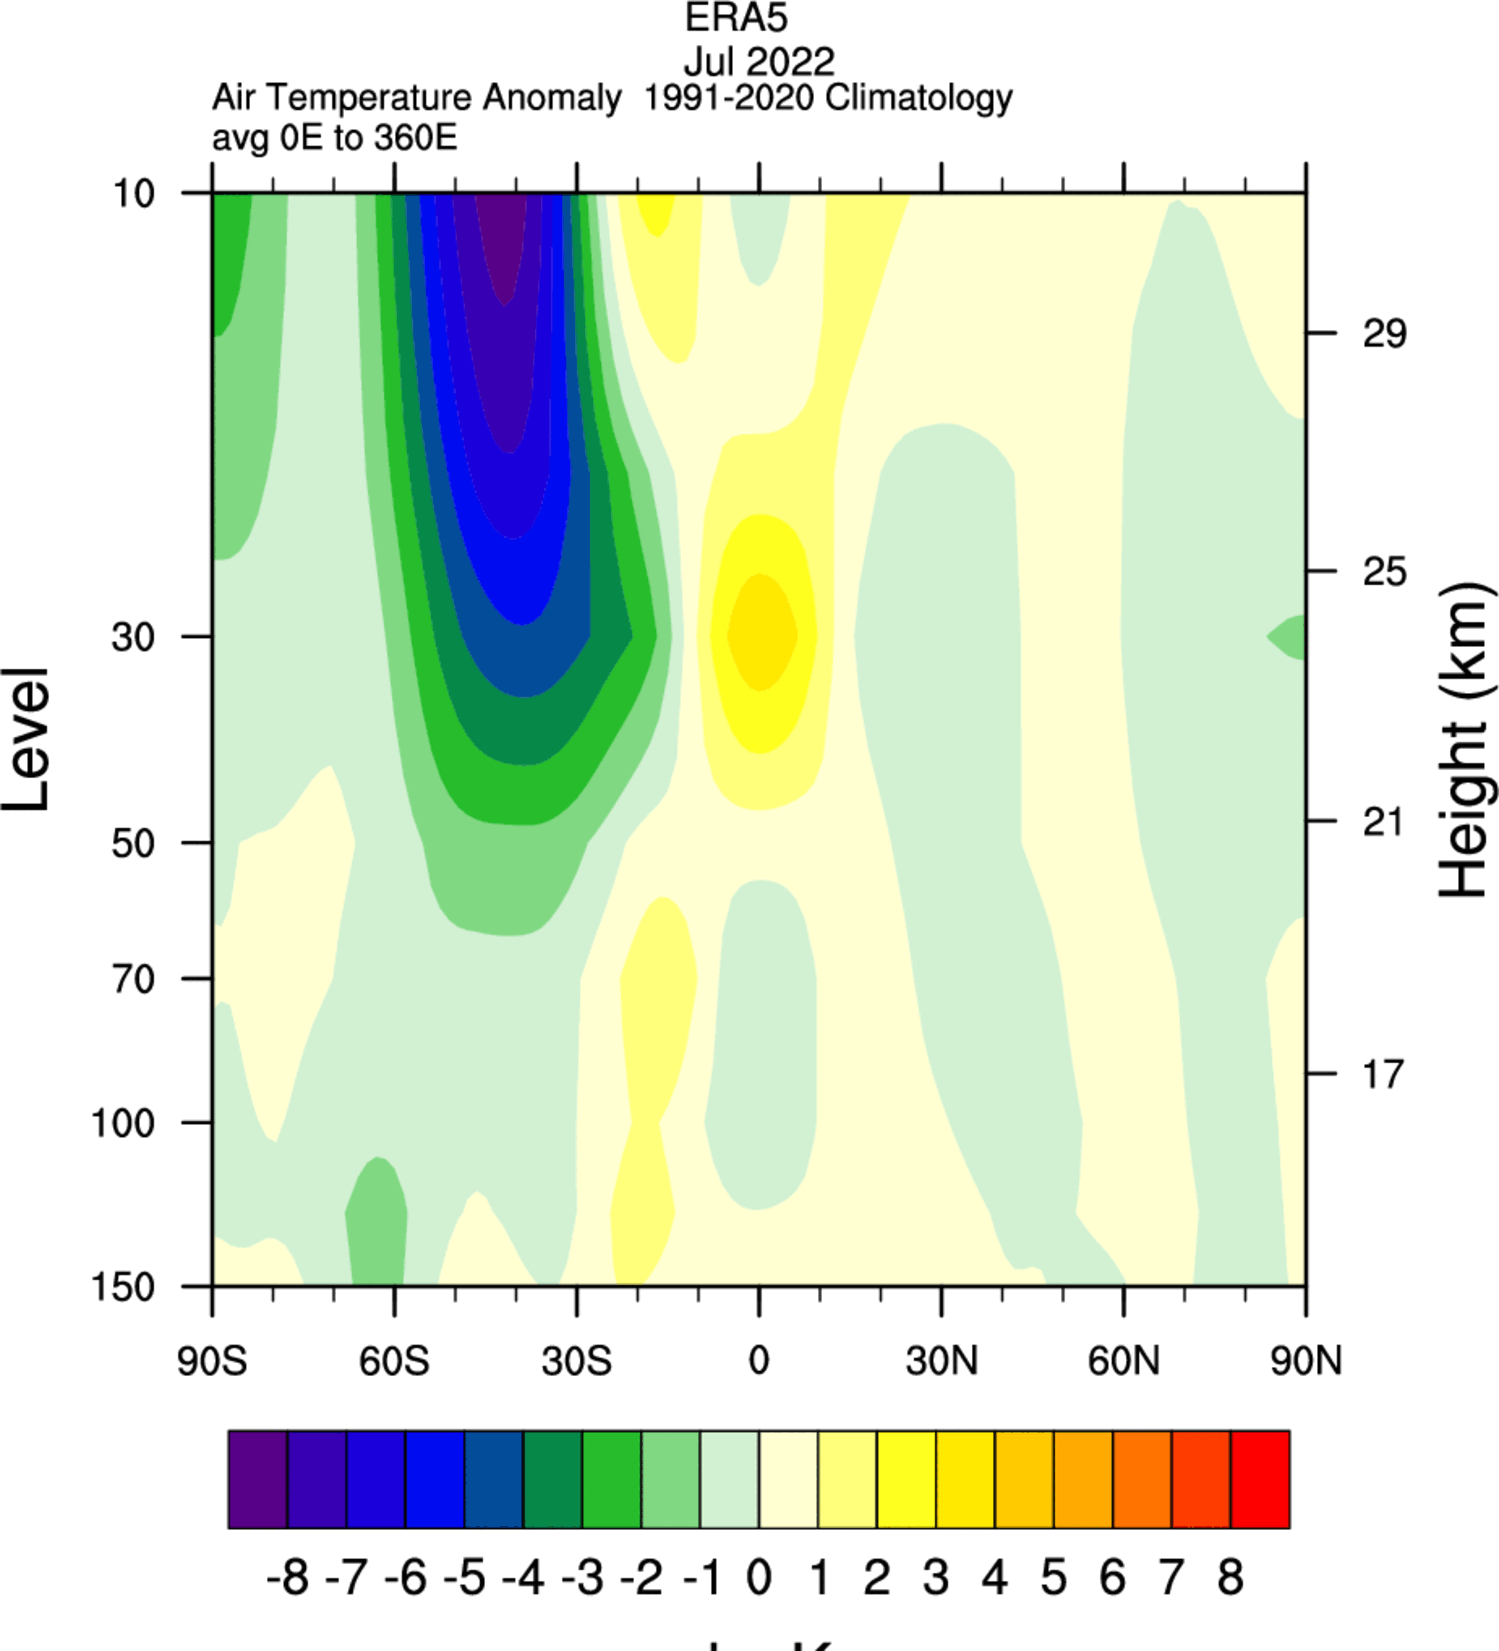 stratosphere-polar-vortex-cold-air-anomaly-vertical-analysis-ecmwf-era-5-july-2022